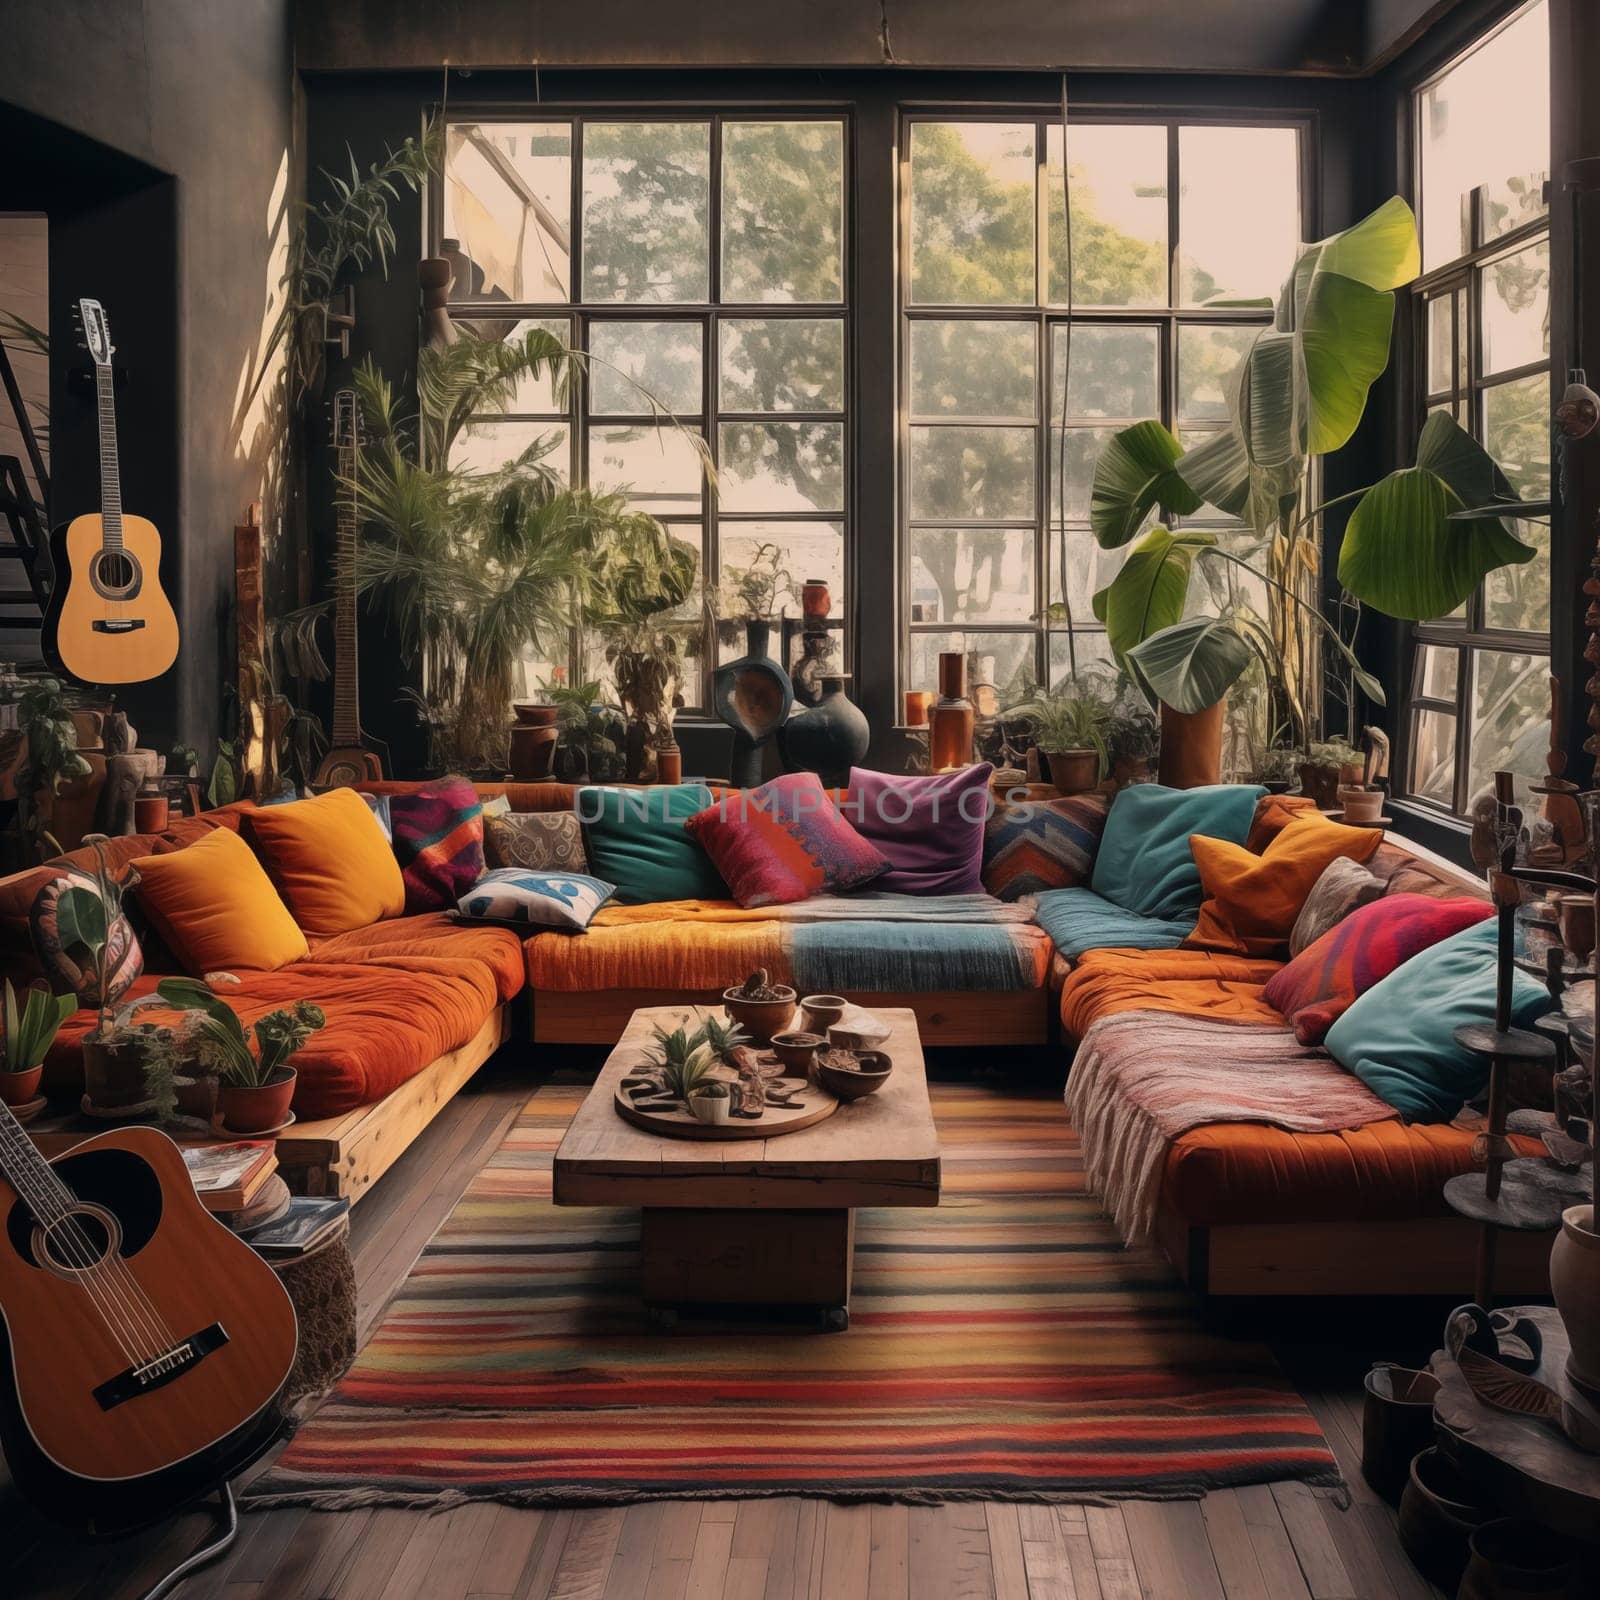 Bohemian living room interior. High quality photo